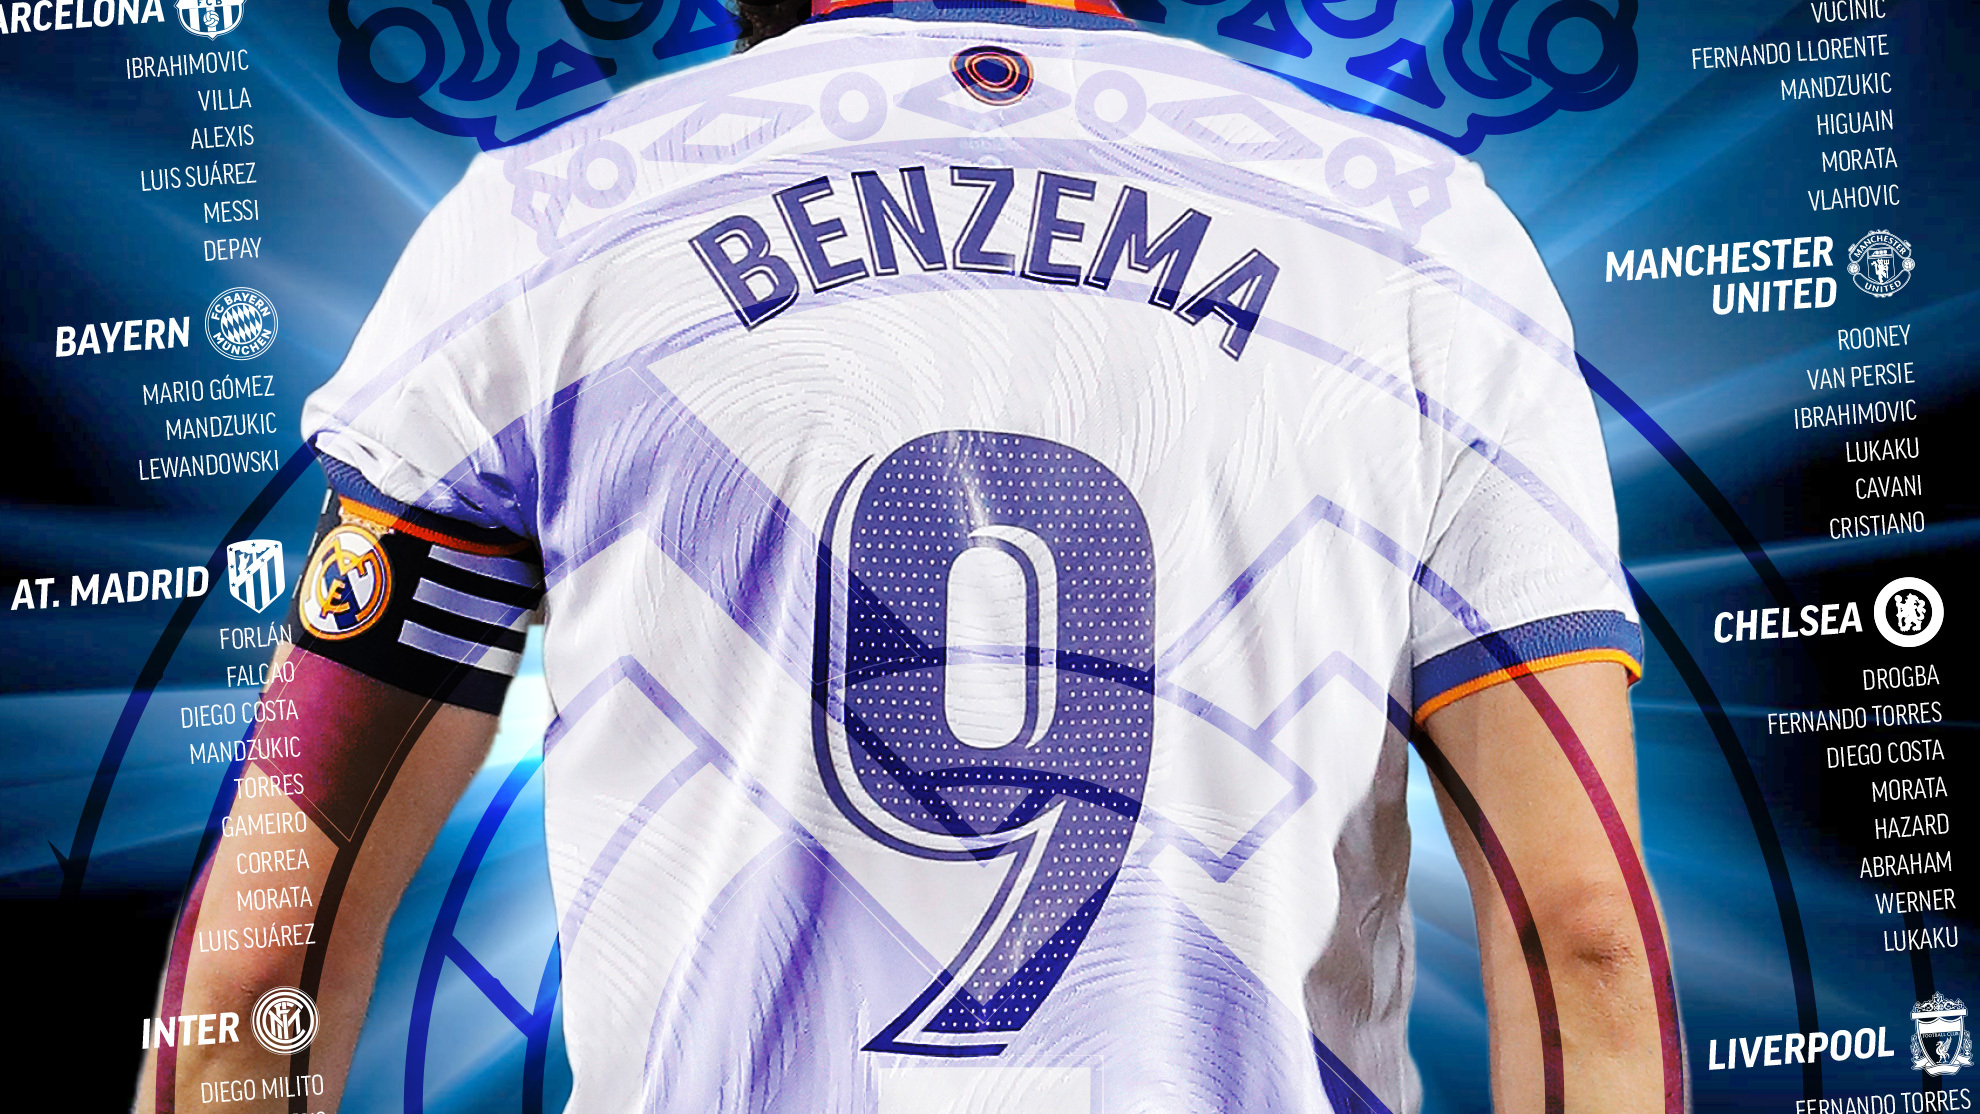 Benzema is unique amongst elite strikers